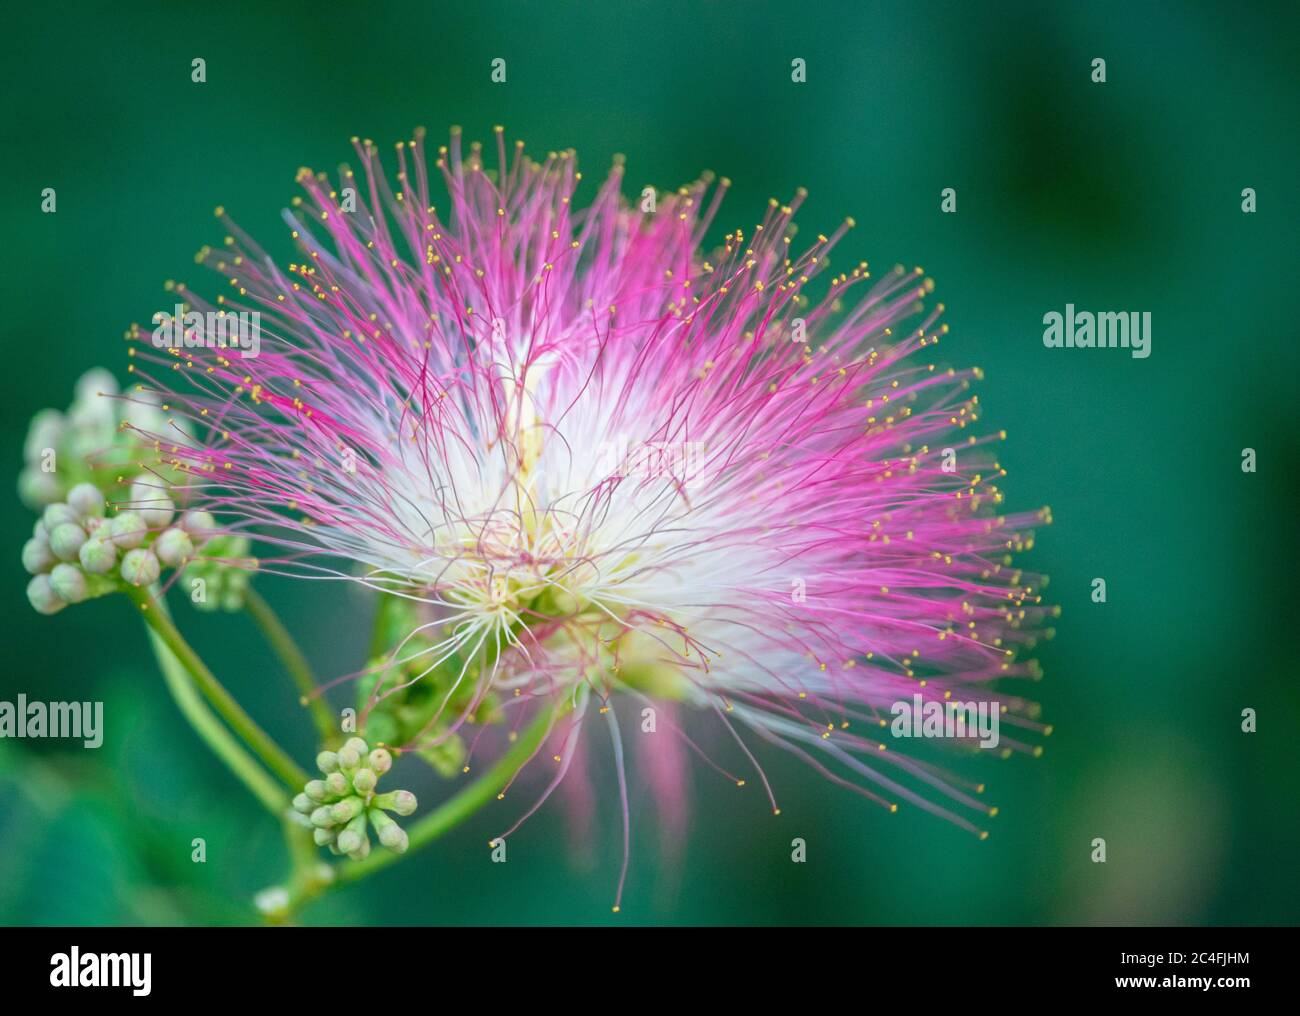 Flower of Lankaran acacia albizia. Albizia julibrissin. Close up Stock Photo